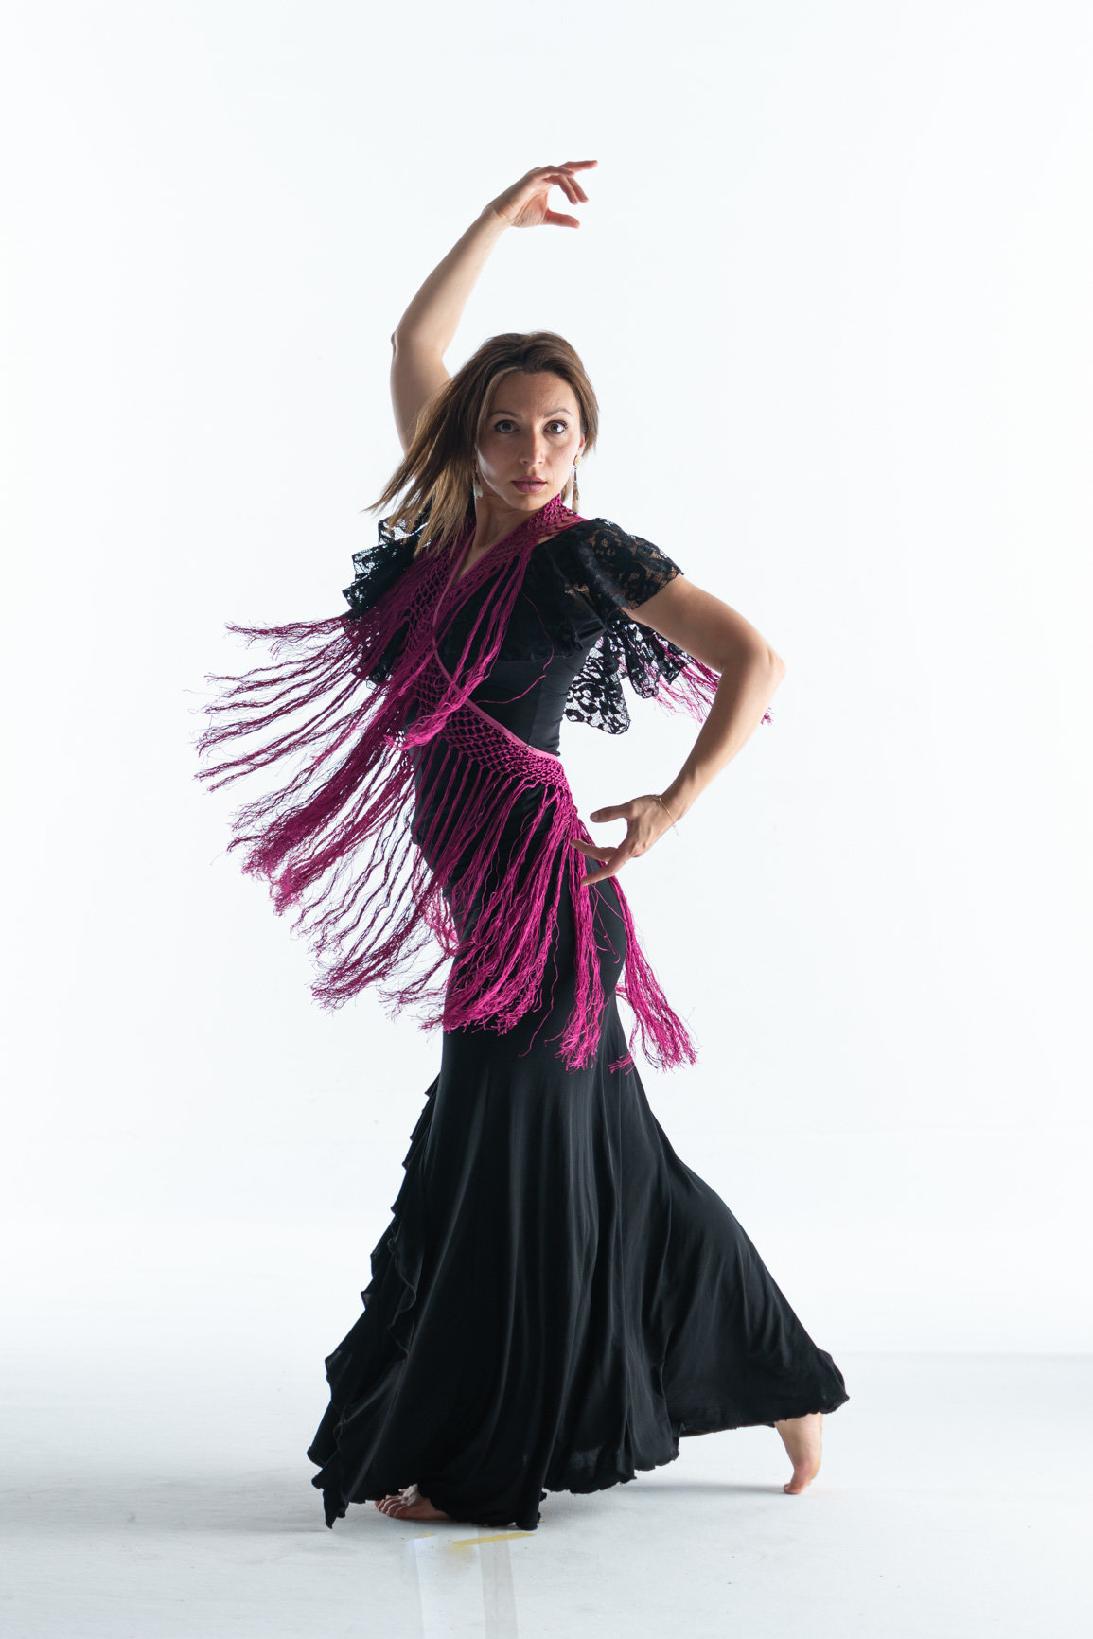 La balandra danseuse flamenco marseille groupe compagnie spectacle istres marseille nimes arles